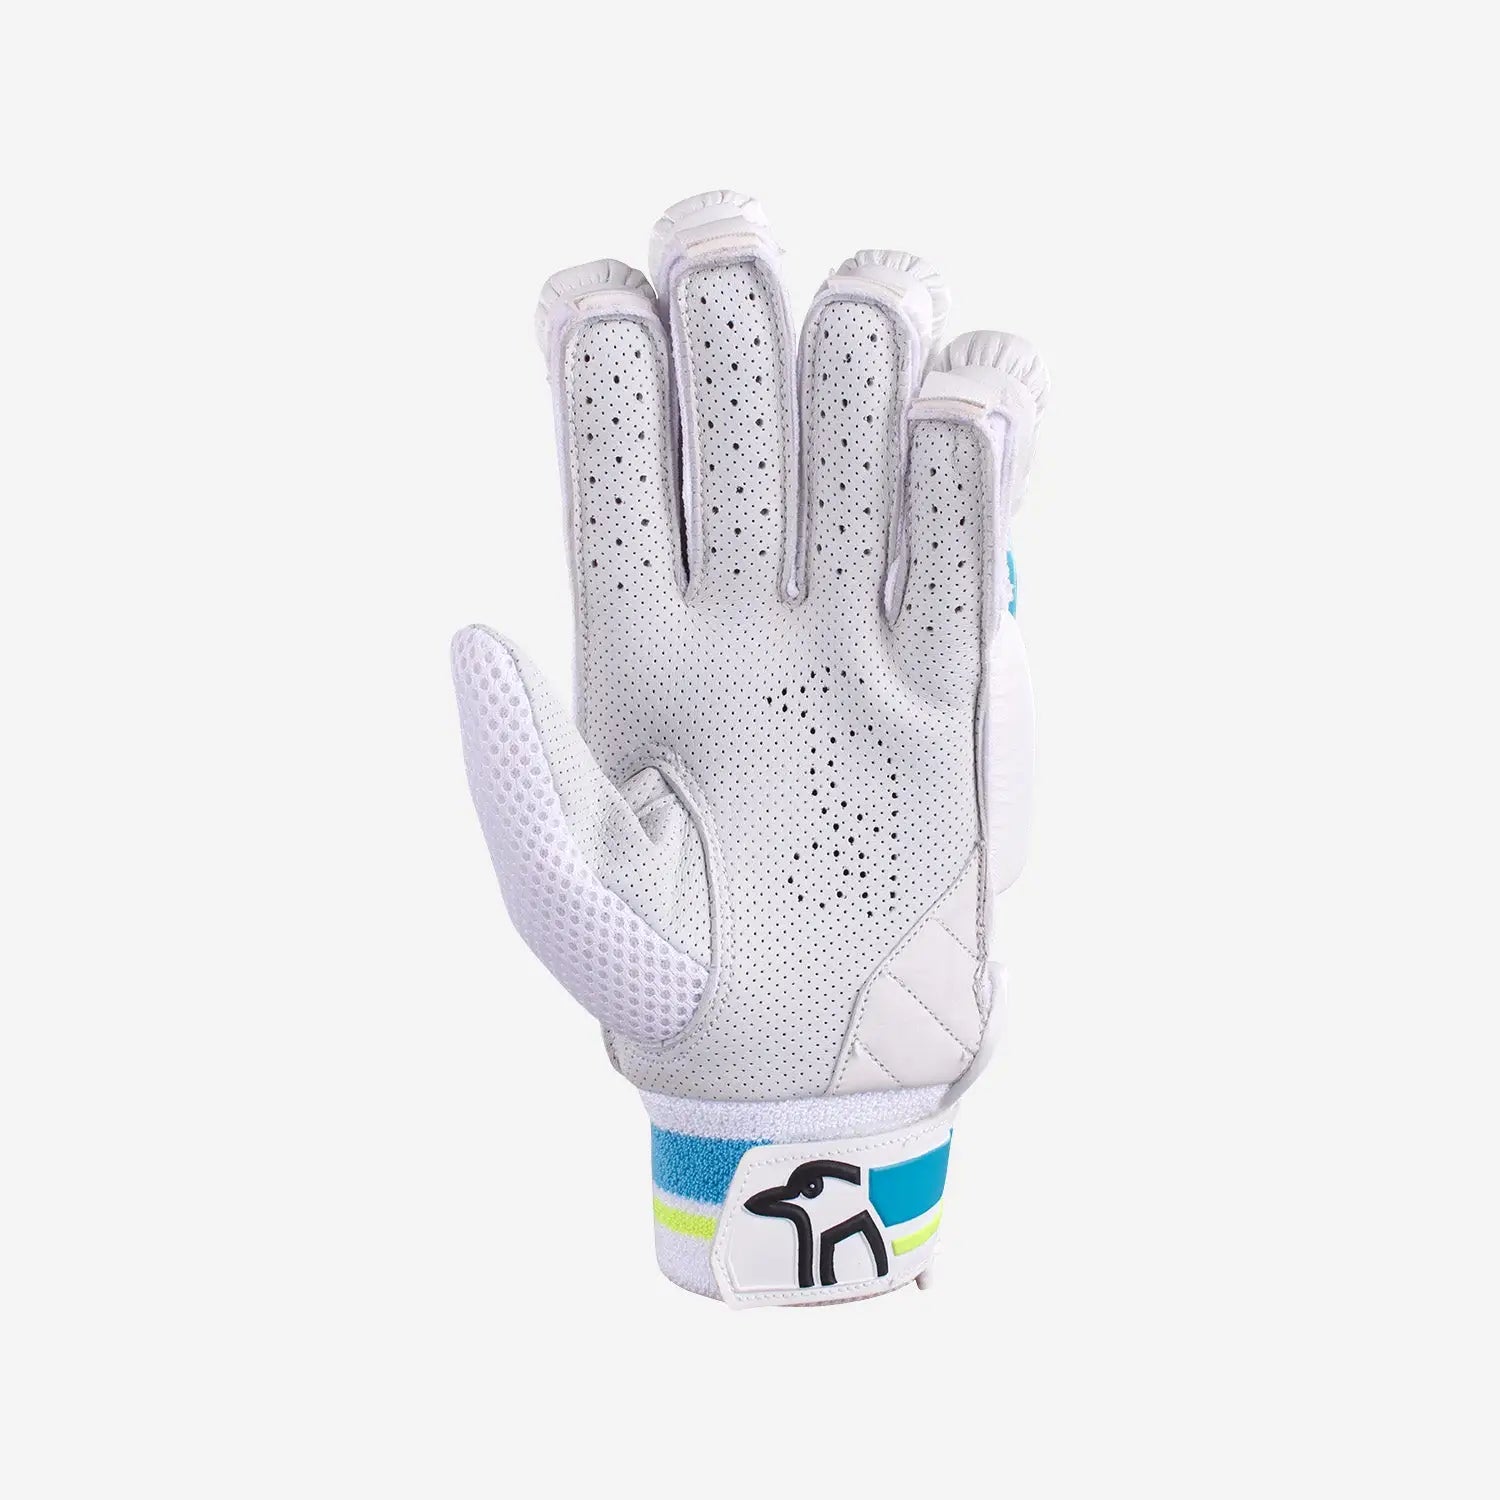 Kookaburra RAPID 2.1 Cricket Batting Gloves Comfort and Protection - Adult RH - GLOVE - BATTING